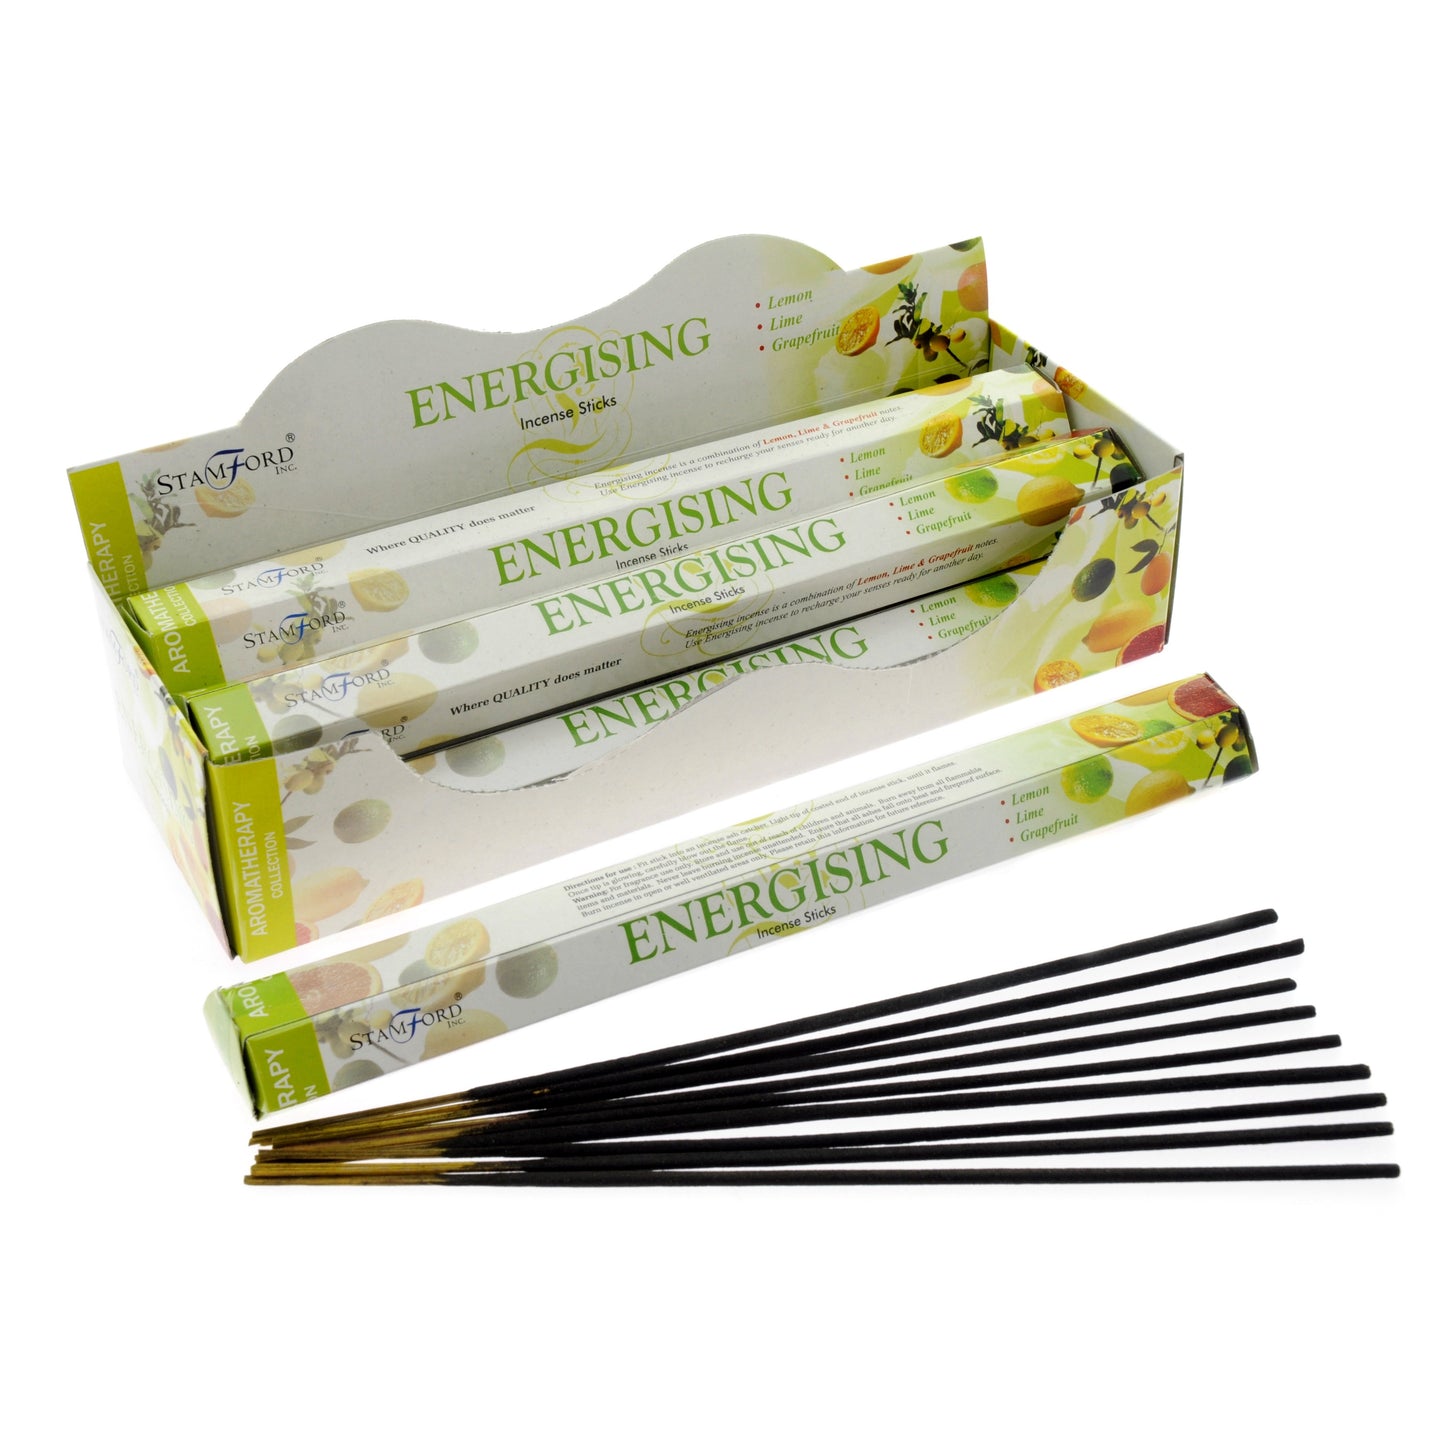 Incense sticks - For energy